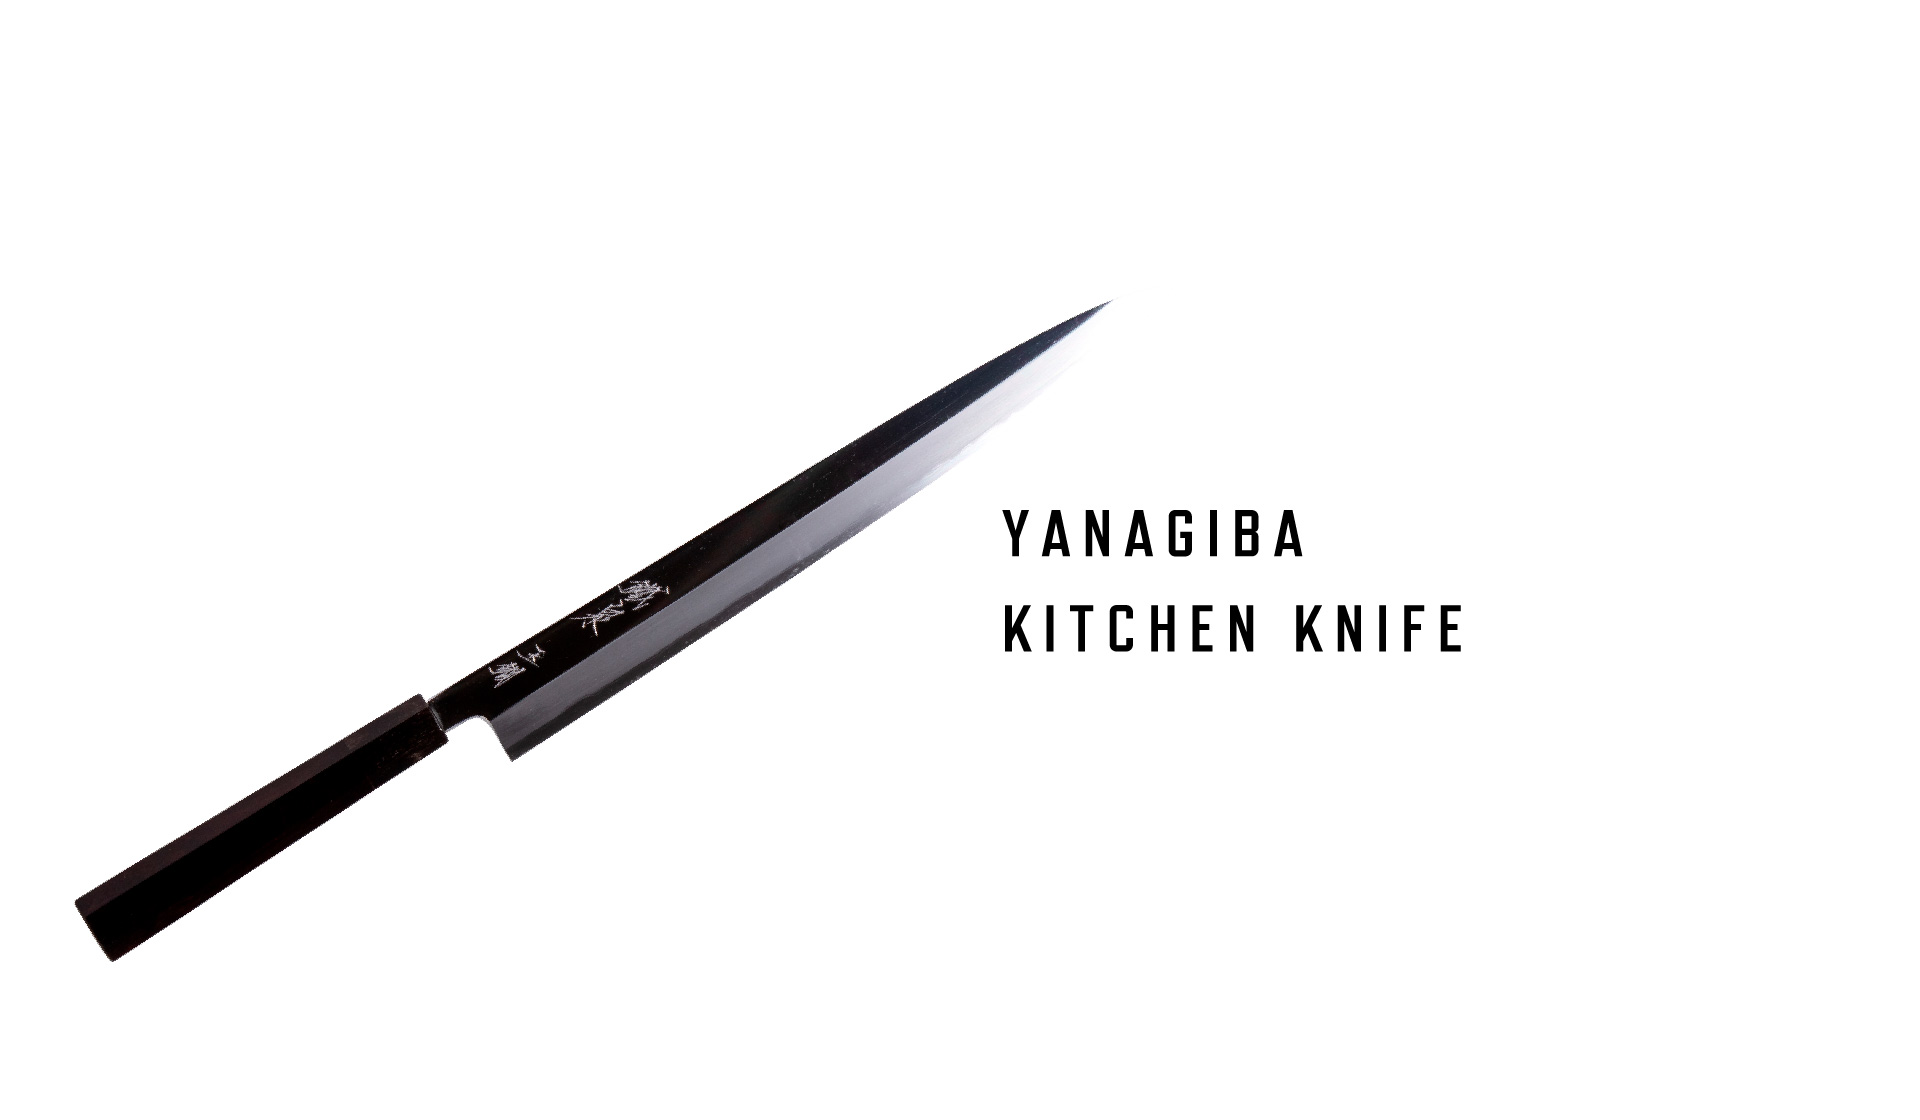 YANAGIBA KITCHEN KNIFE